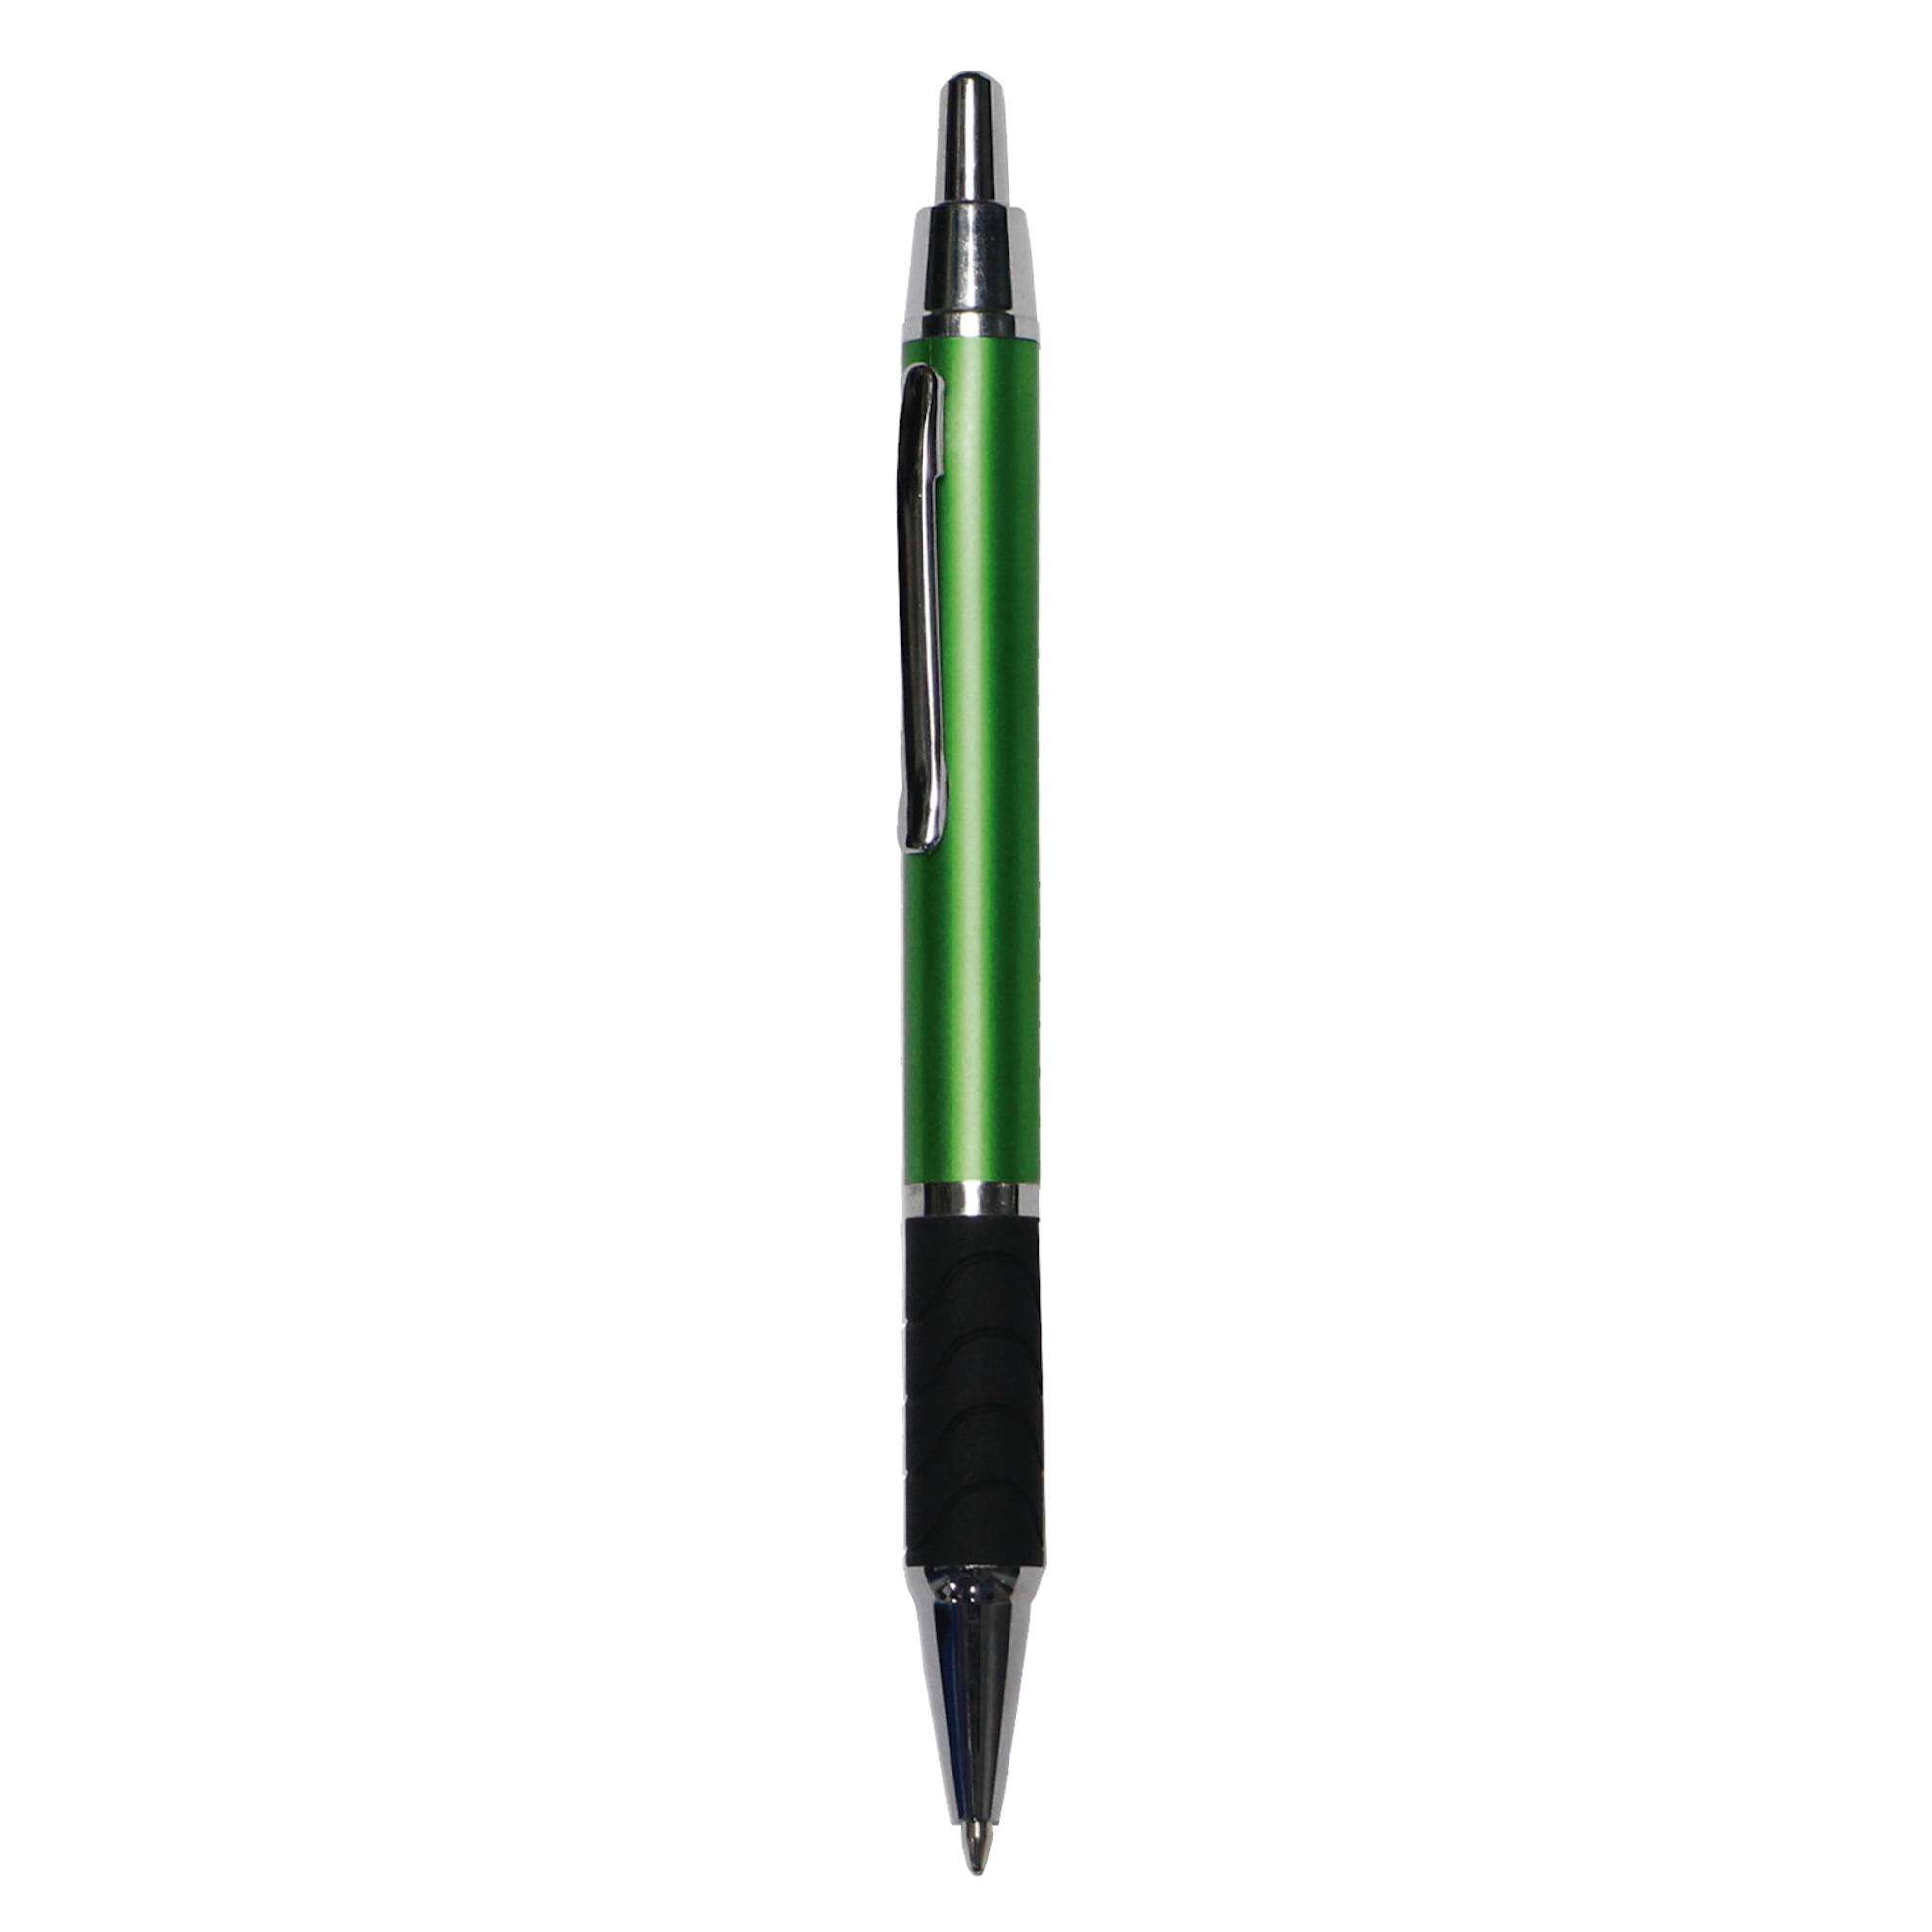 Bolígrafo Tamesis
Color verde